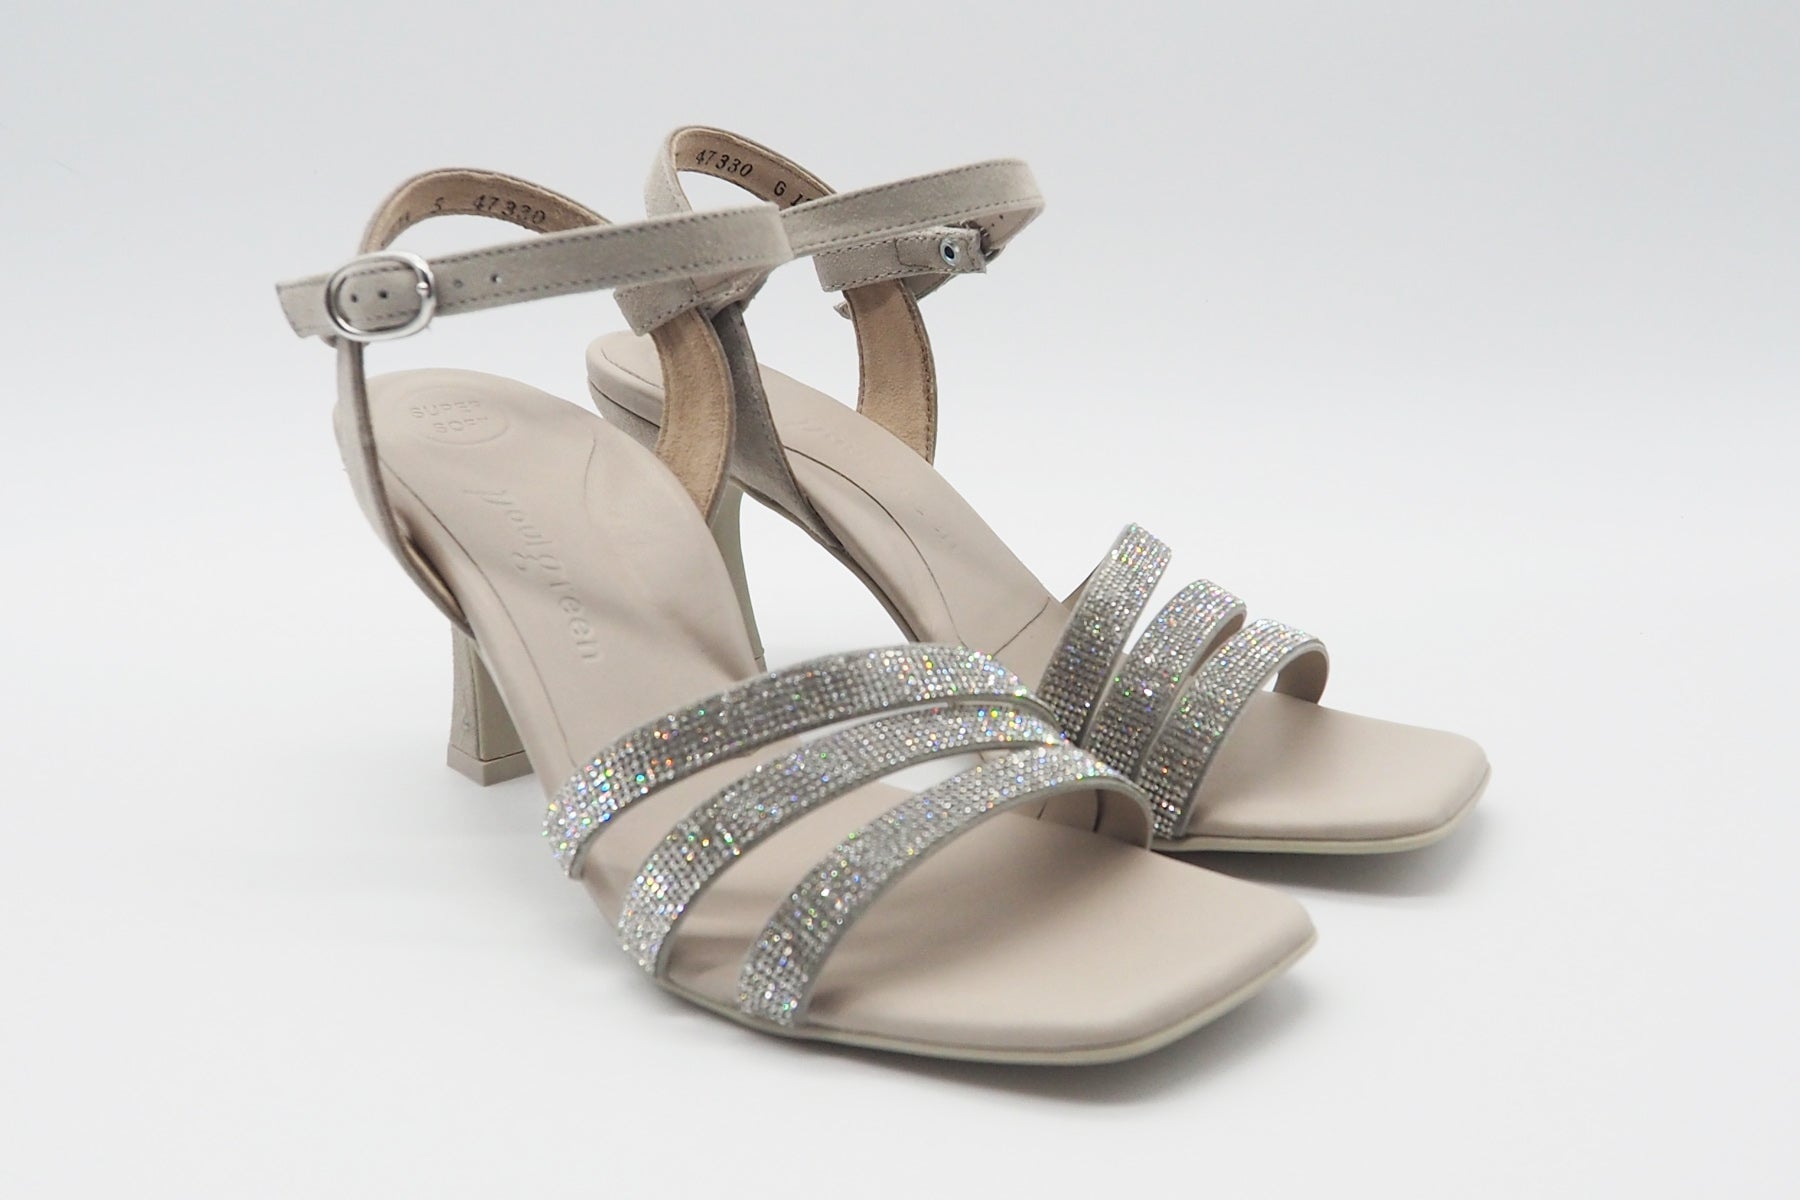 Damen Absatz-Sandale aus Veloursleder in Stone - Absatz 9cm Damen Sandalen Paul Green 